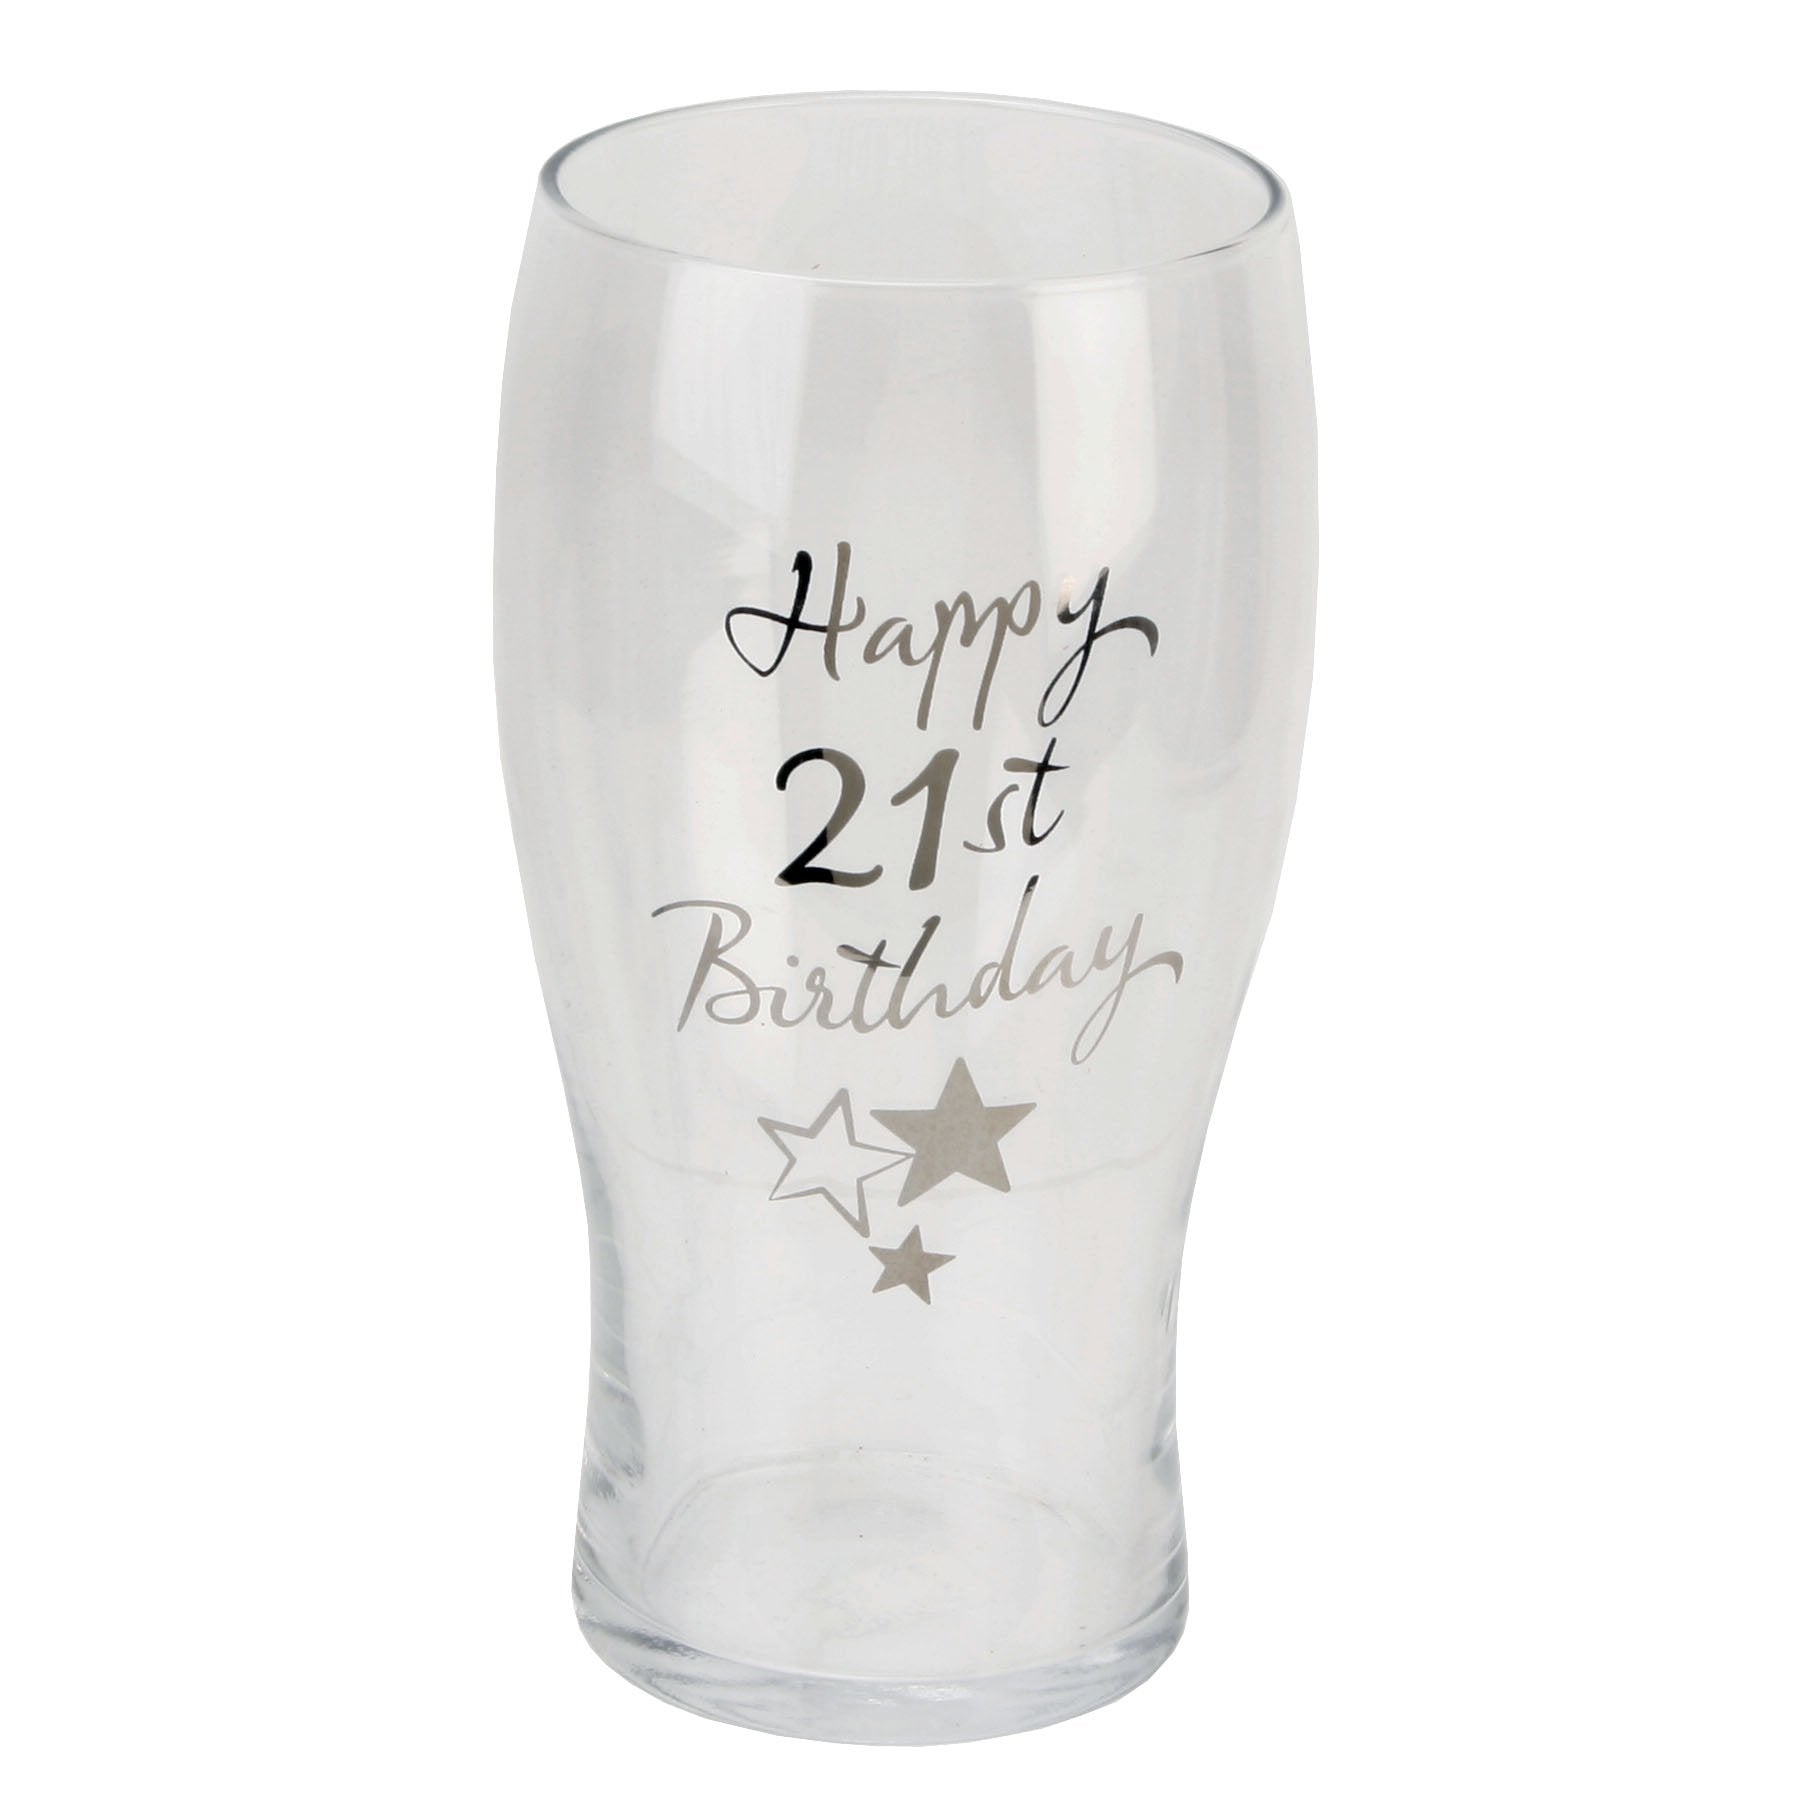 Juliana-Happy-21st-Birthday-Pint-Glass-in-Gift-Box-by-Juliana